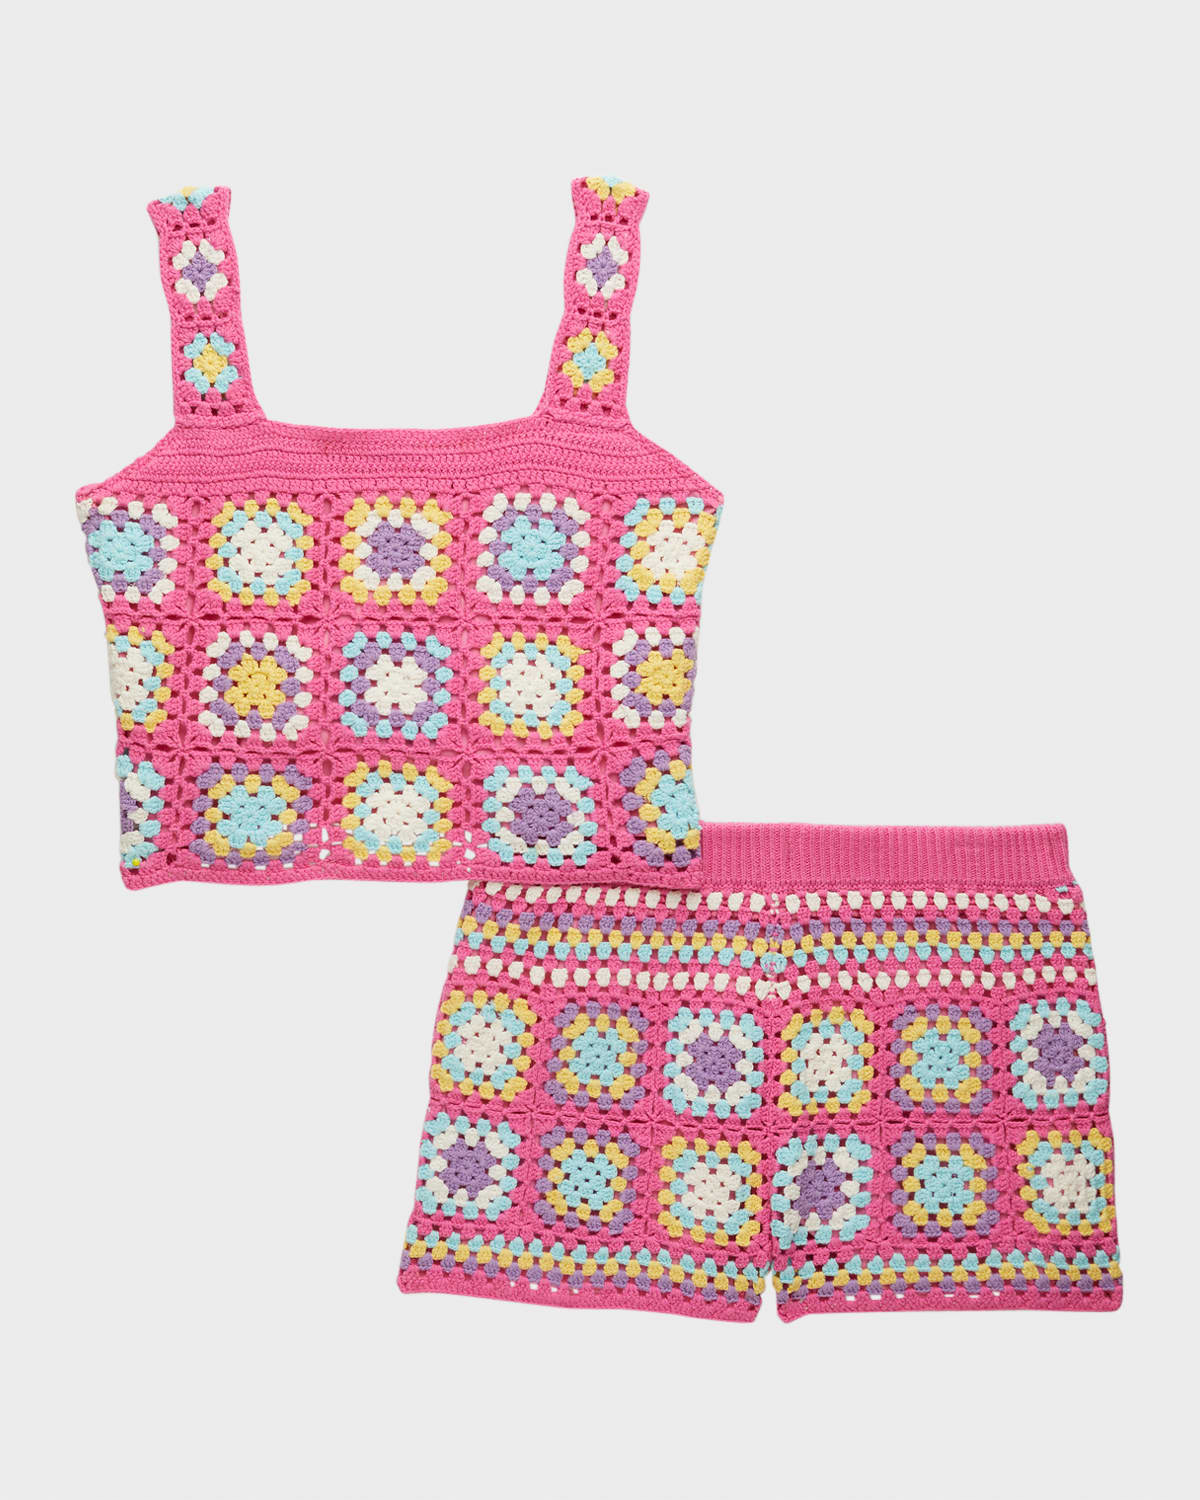 Girl's Crochet Shorts 2-Piece Set, Size 4-6X